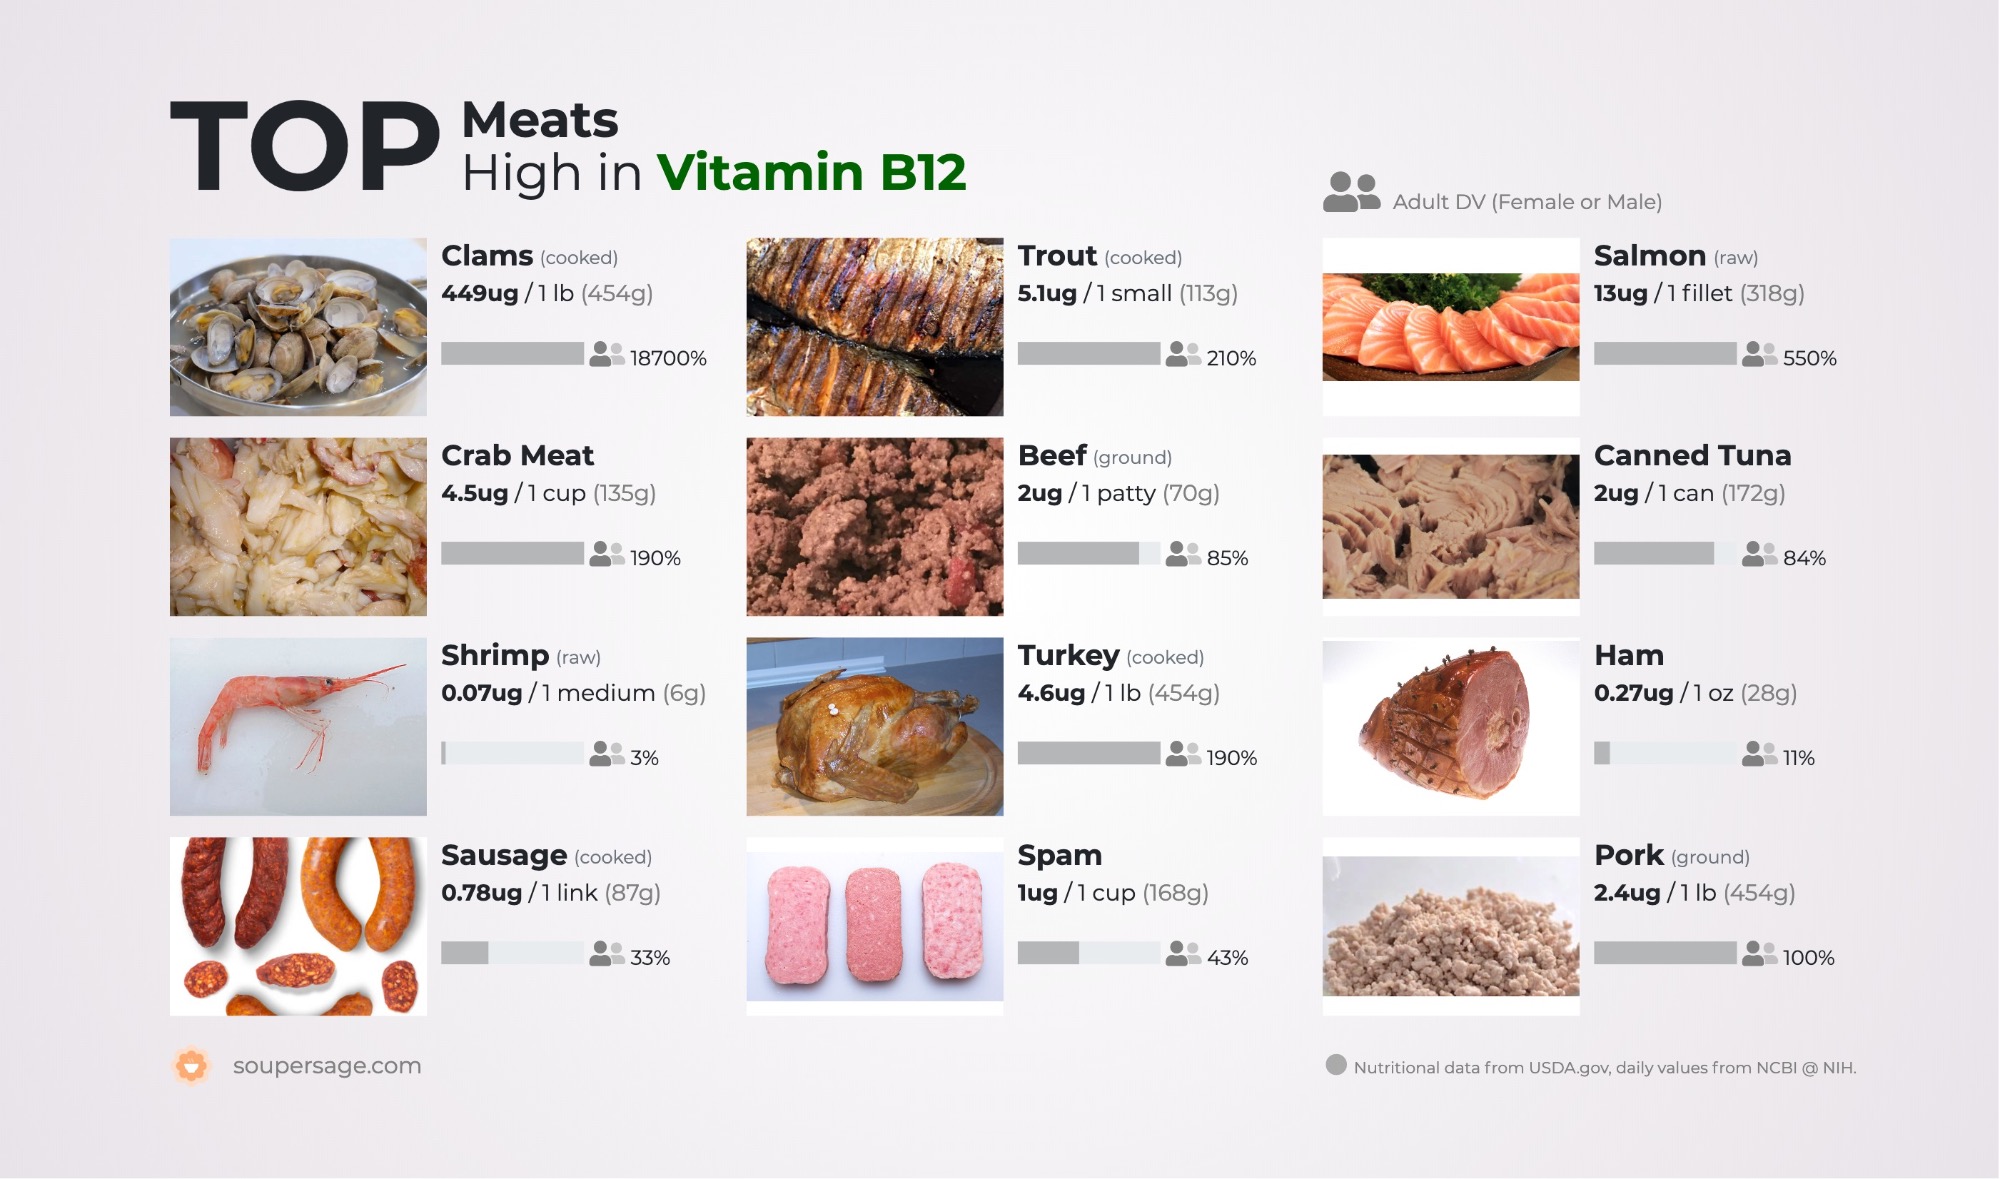 Top Meats High in Vitamin B12 - Souper Sage